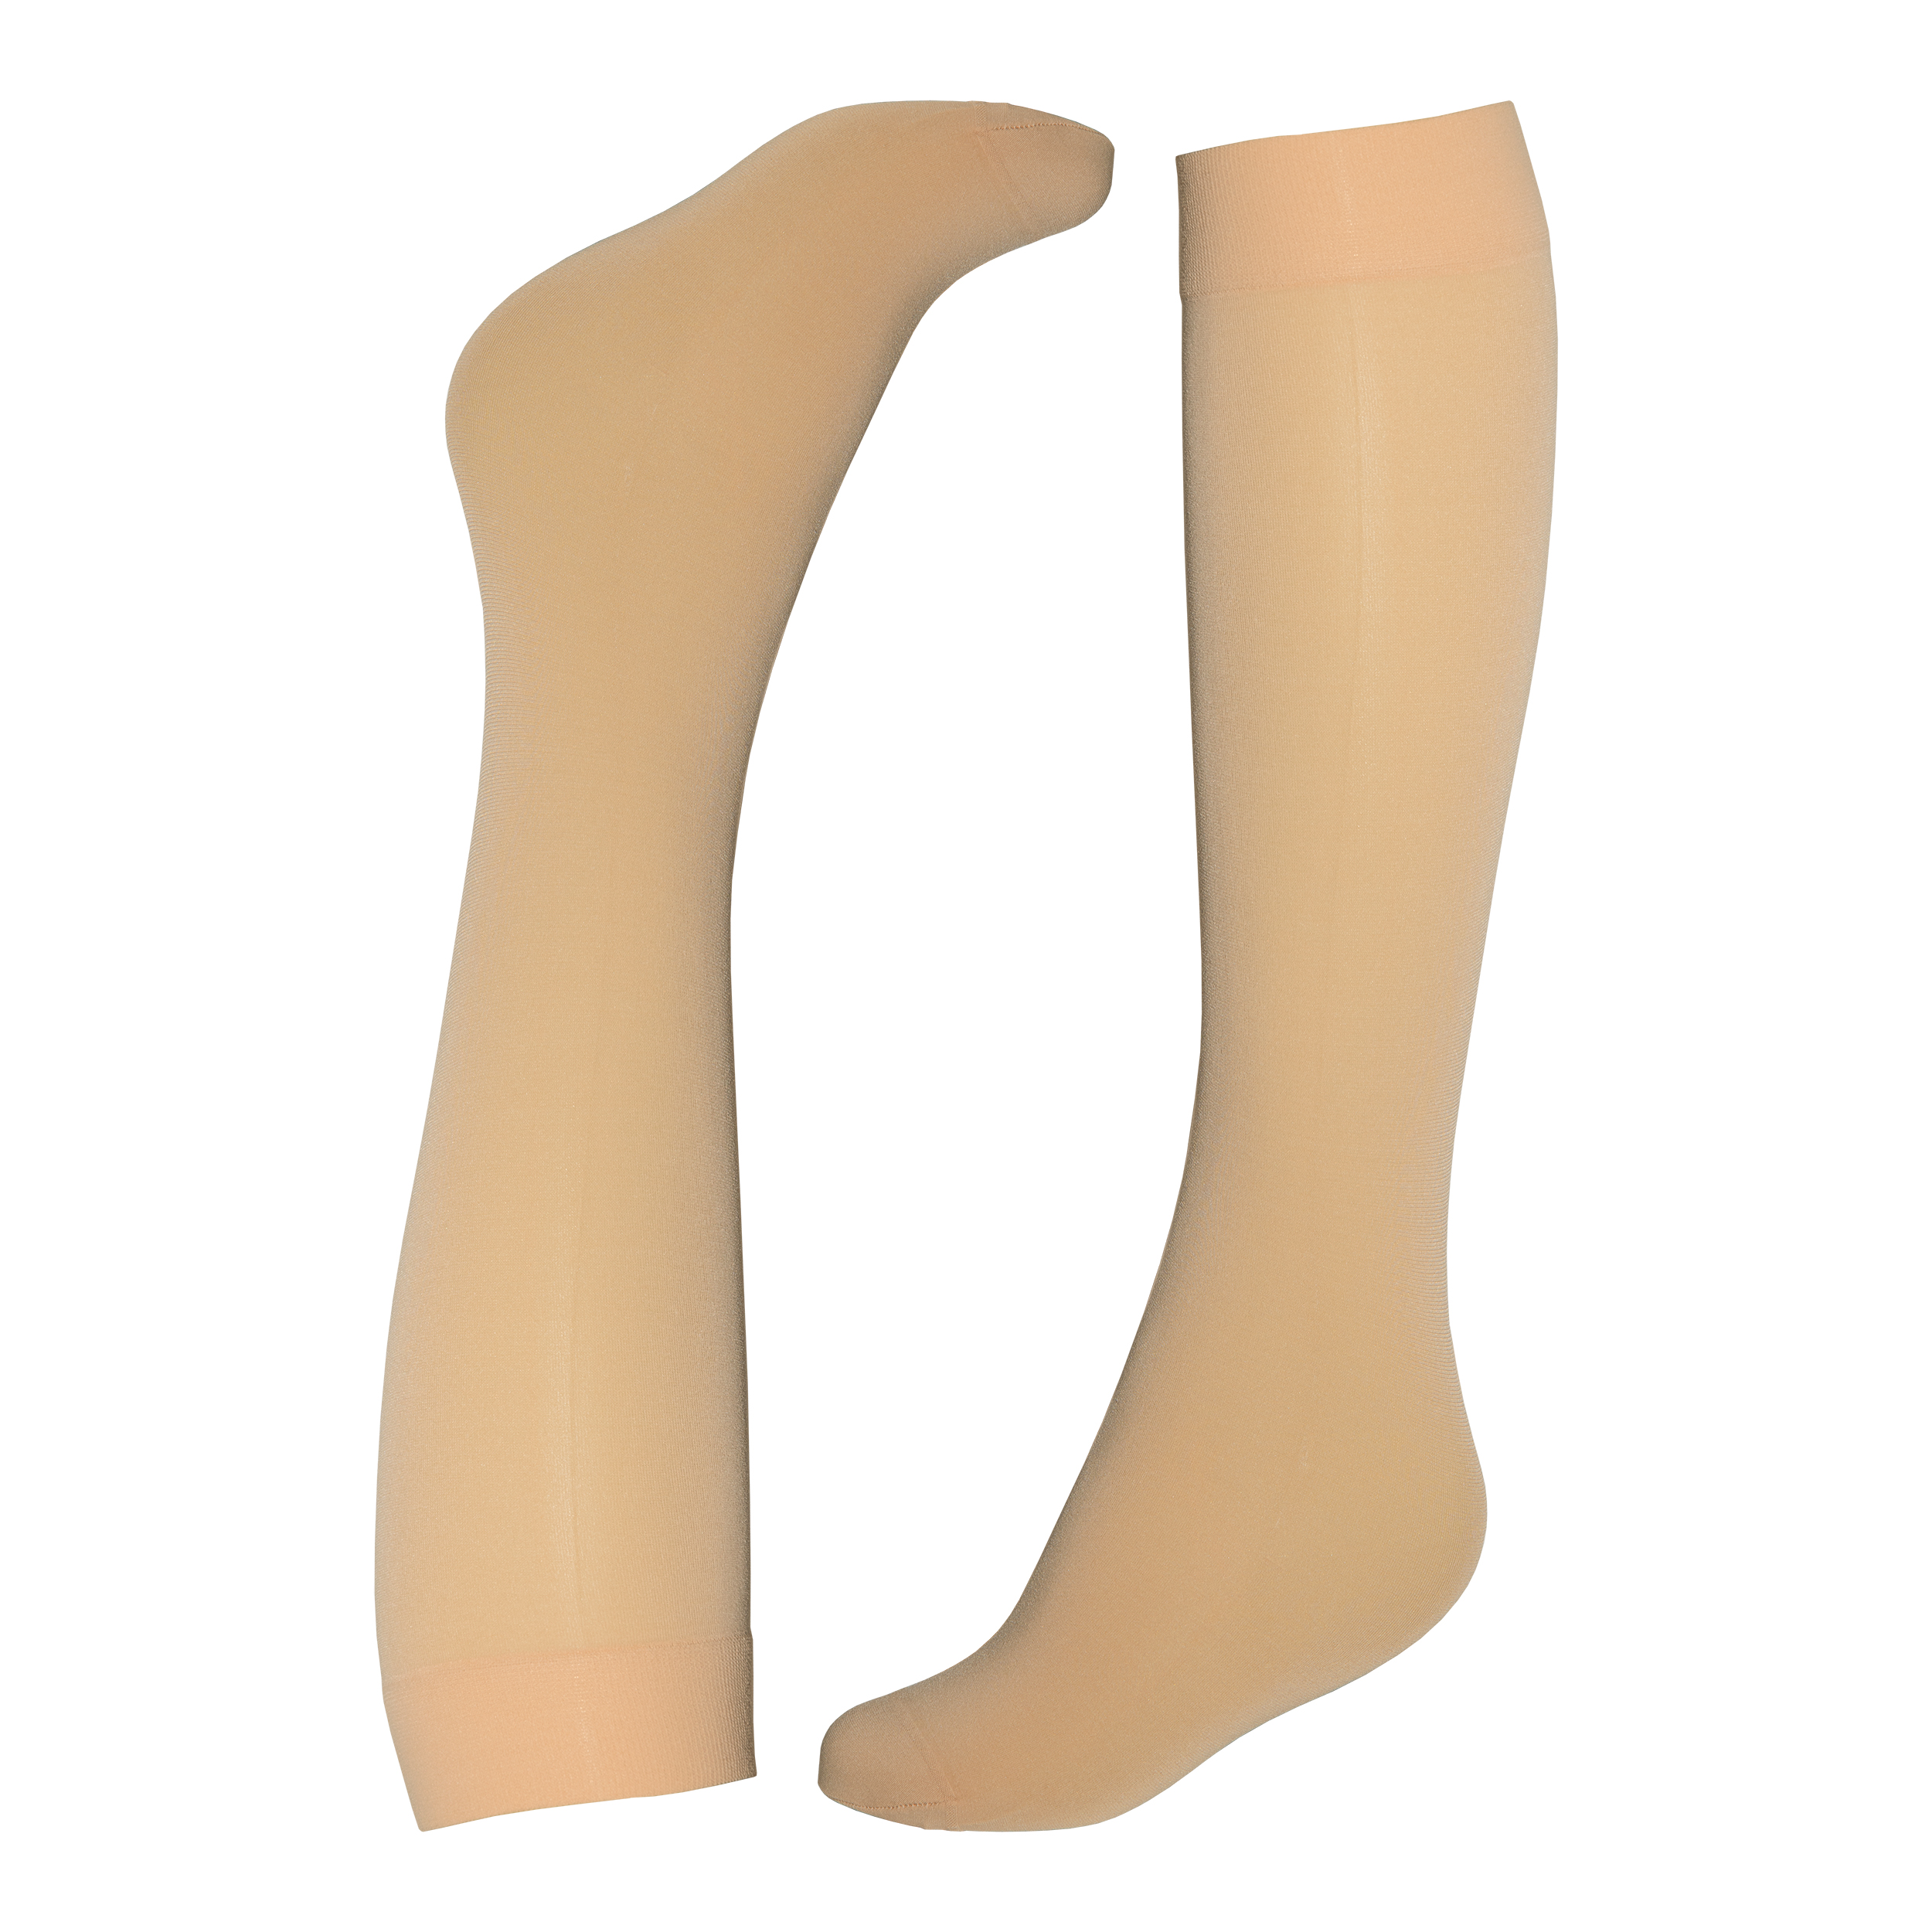 جوراب ساق بلند زنانه پریزن مدل سه ربع DEN40-K رنگ کرم